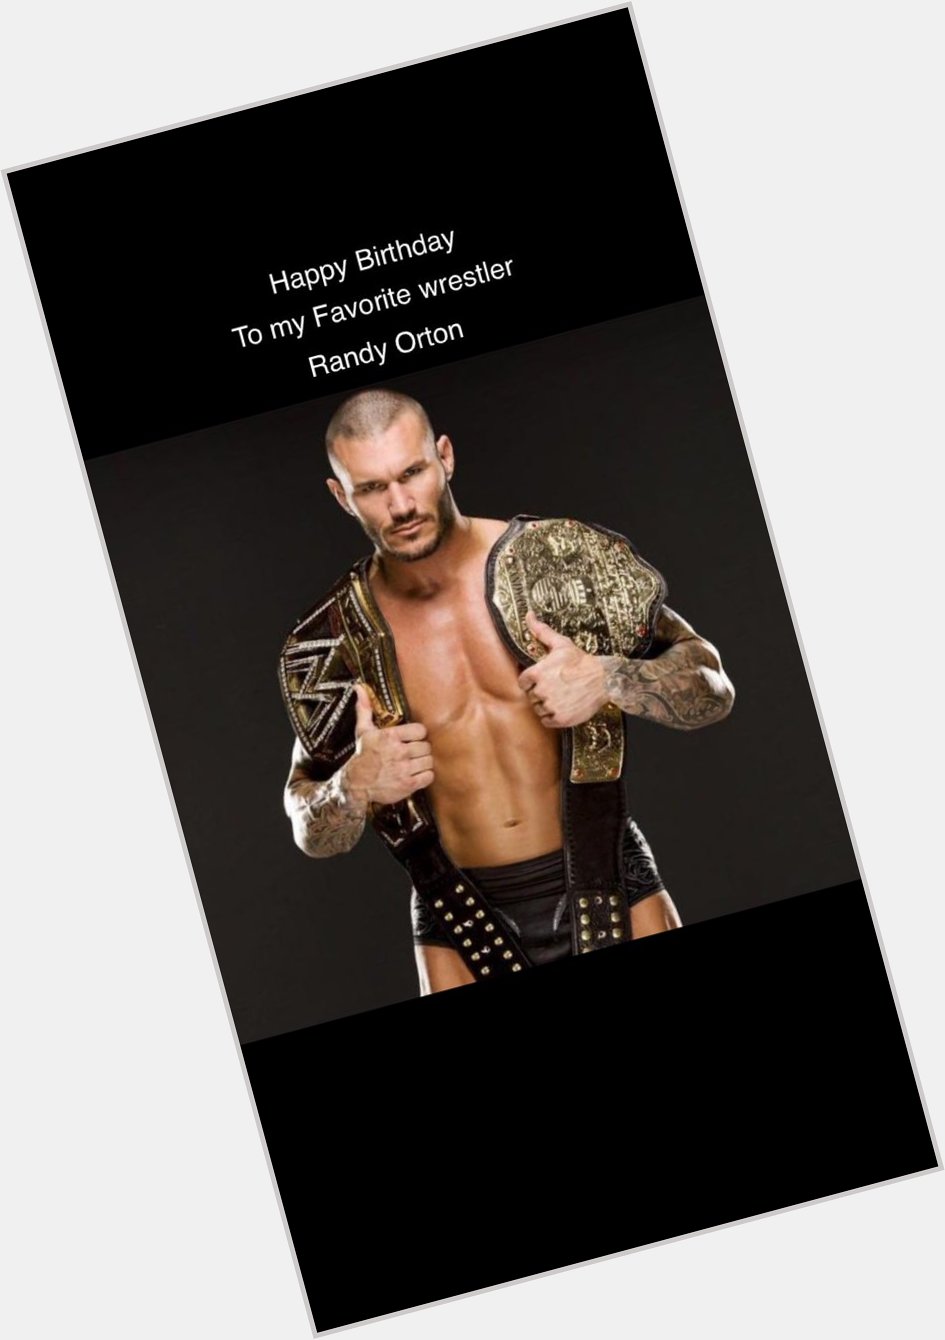 Happy Birthday To my favorite wrestler Randy Orton         